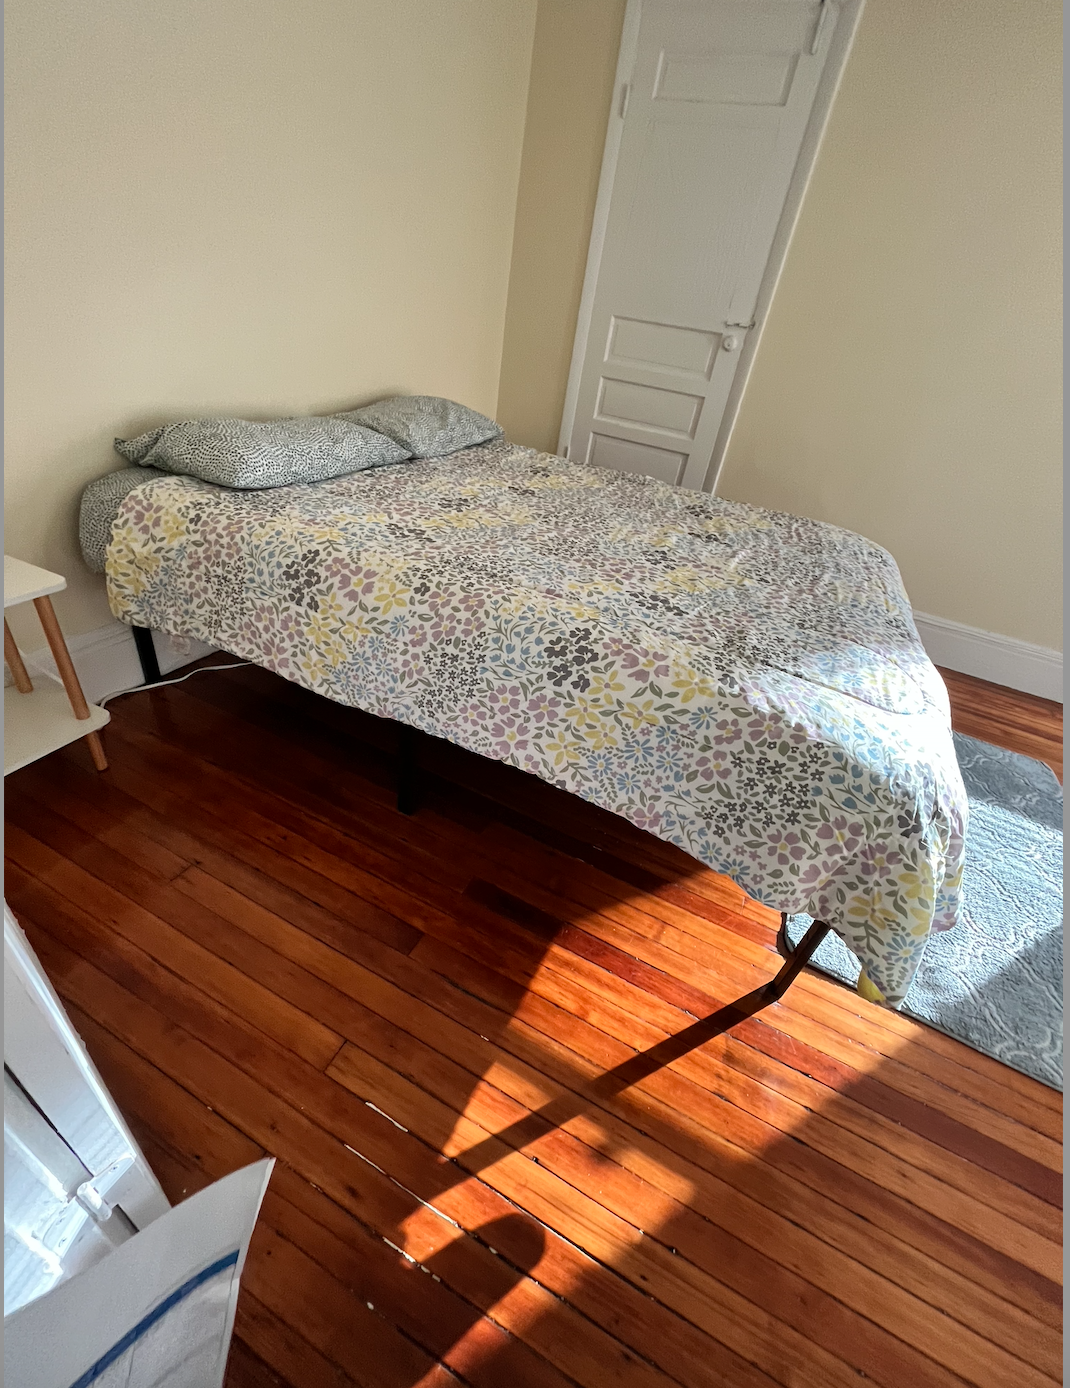 Photos of apartment on Pratt St. Room 3,Boston MA 02134